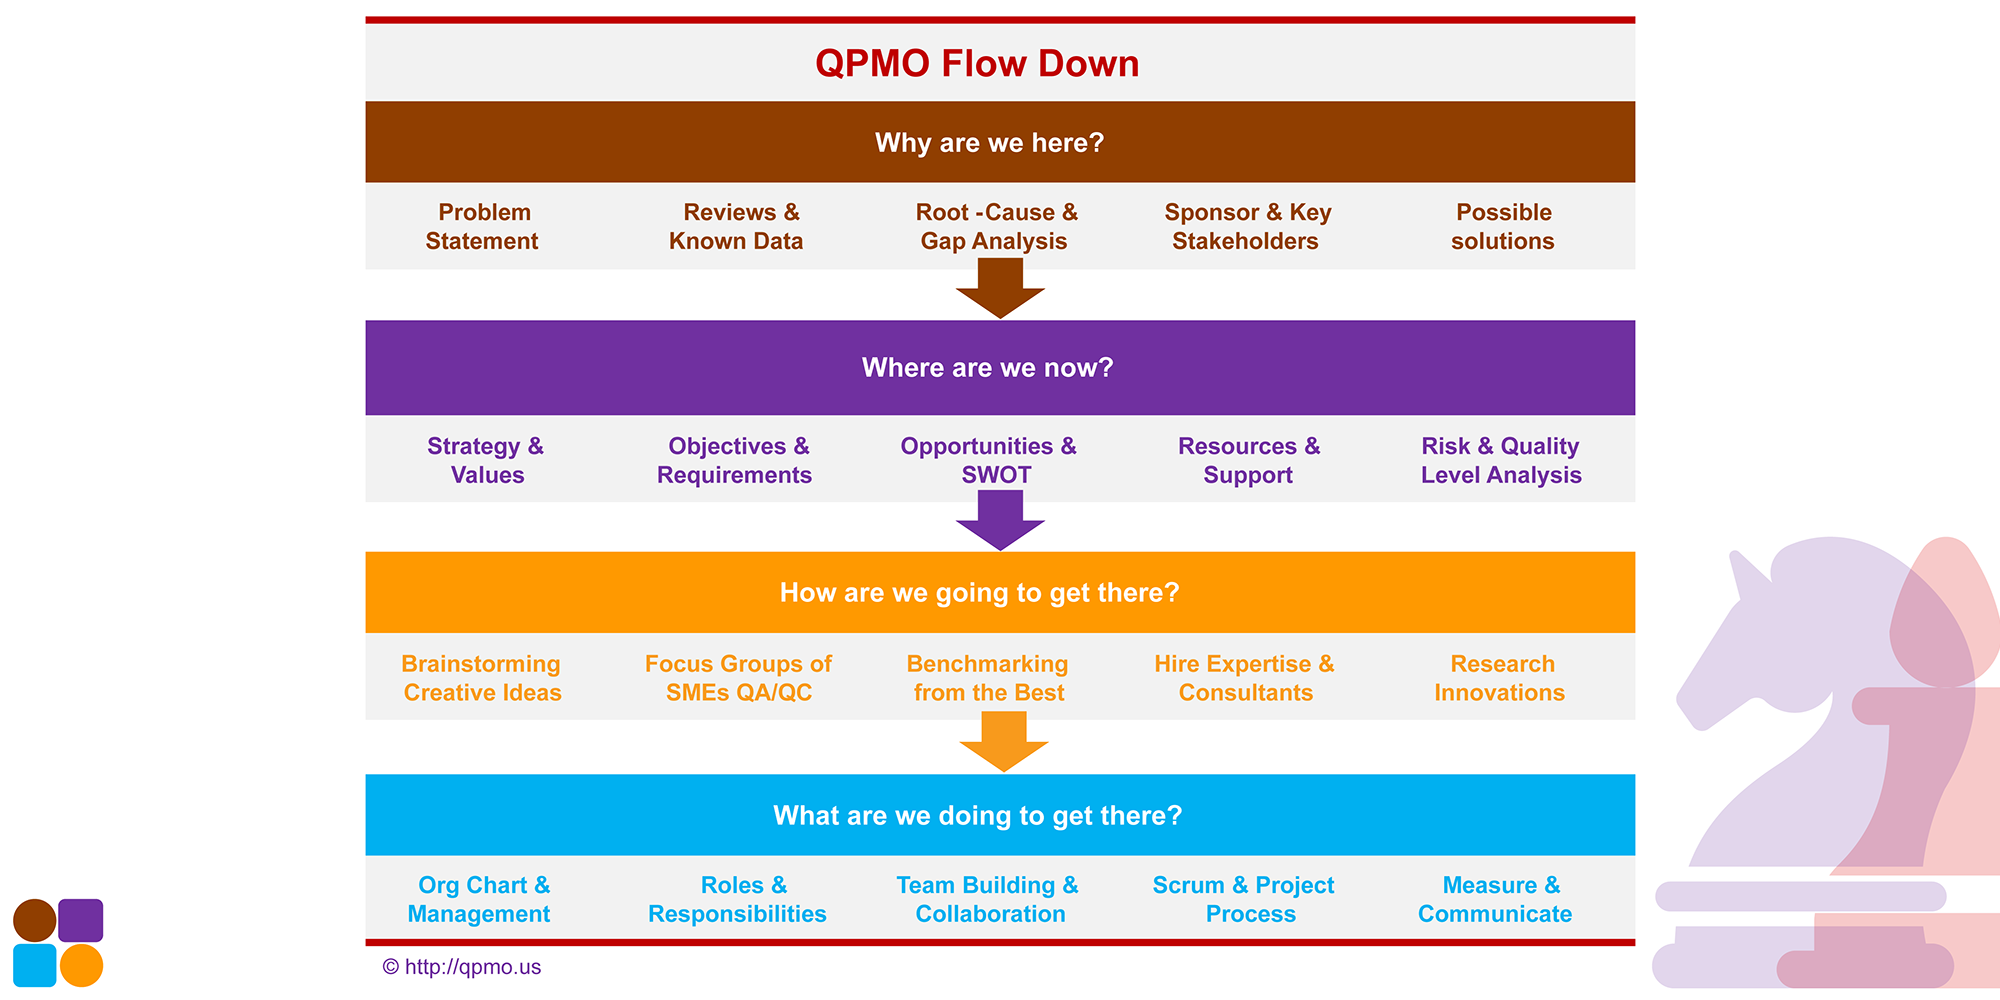 QPMO Flowdown